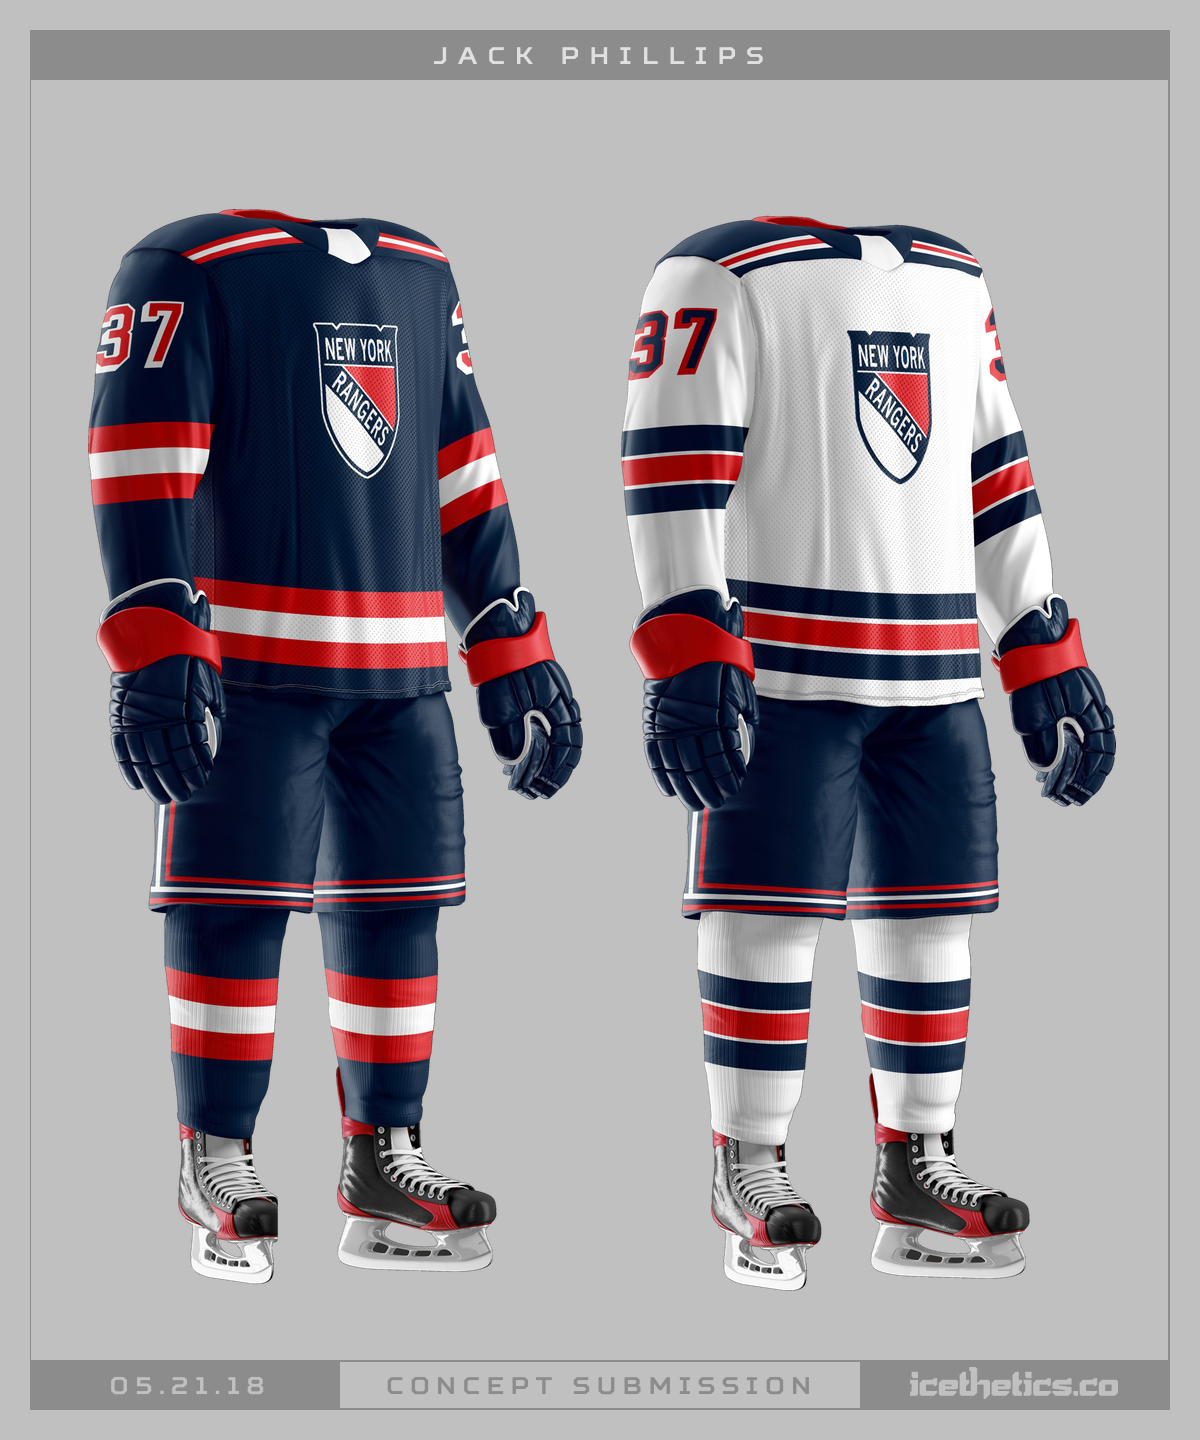 Rangers New York Americans Heritage Jersey Concept : r/rangers